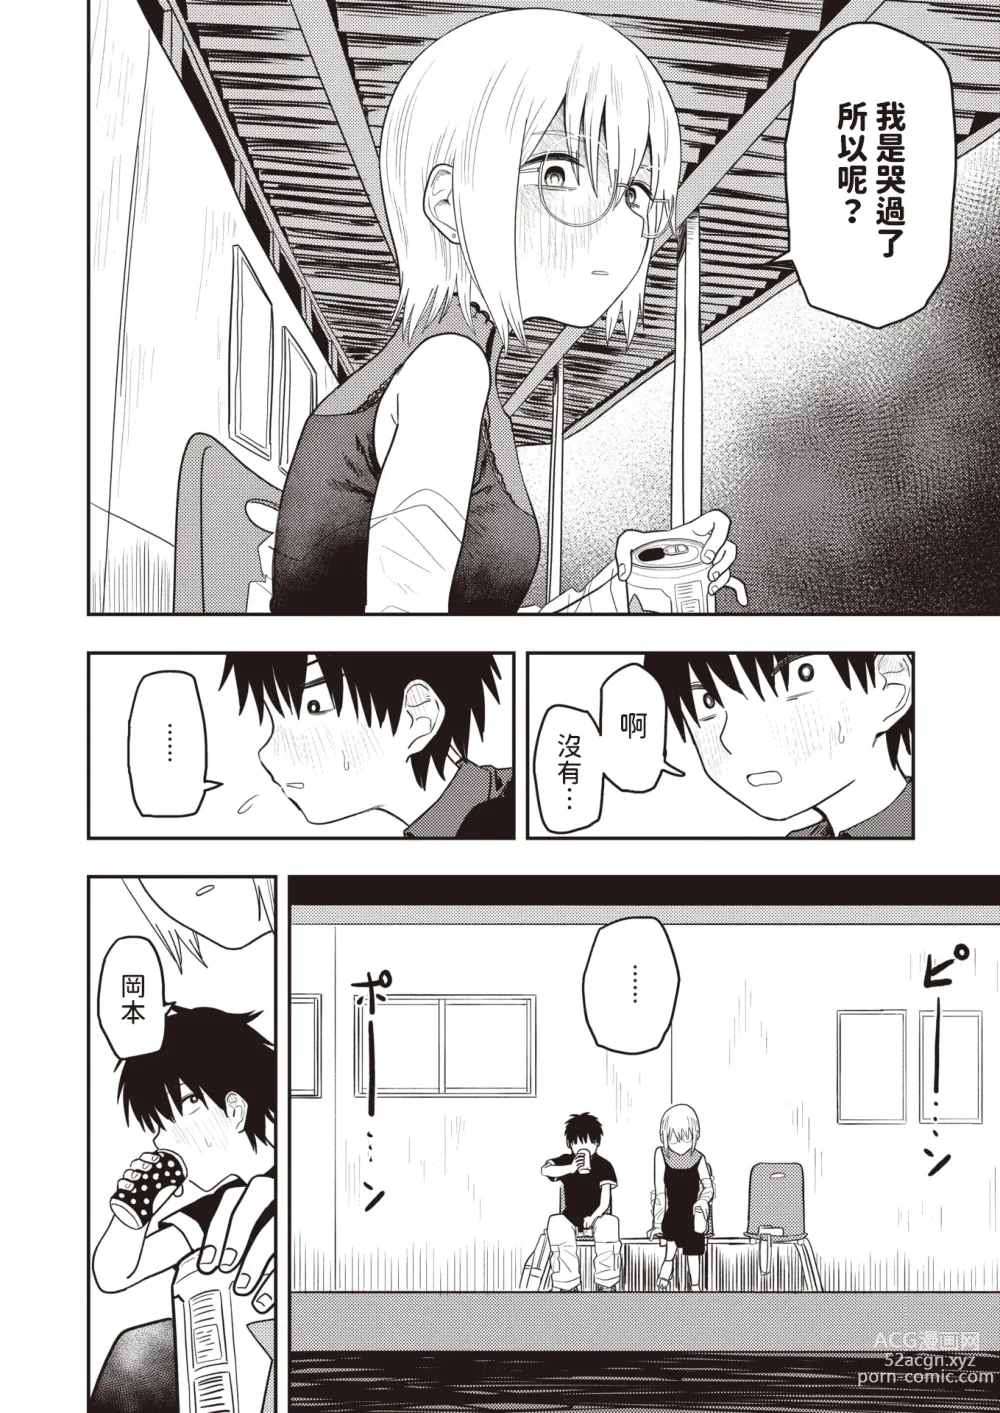 Page 8 of manga Hidoi yo Kiriyama Sensei - Thats really mean!